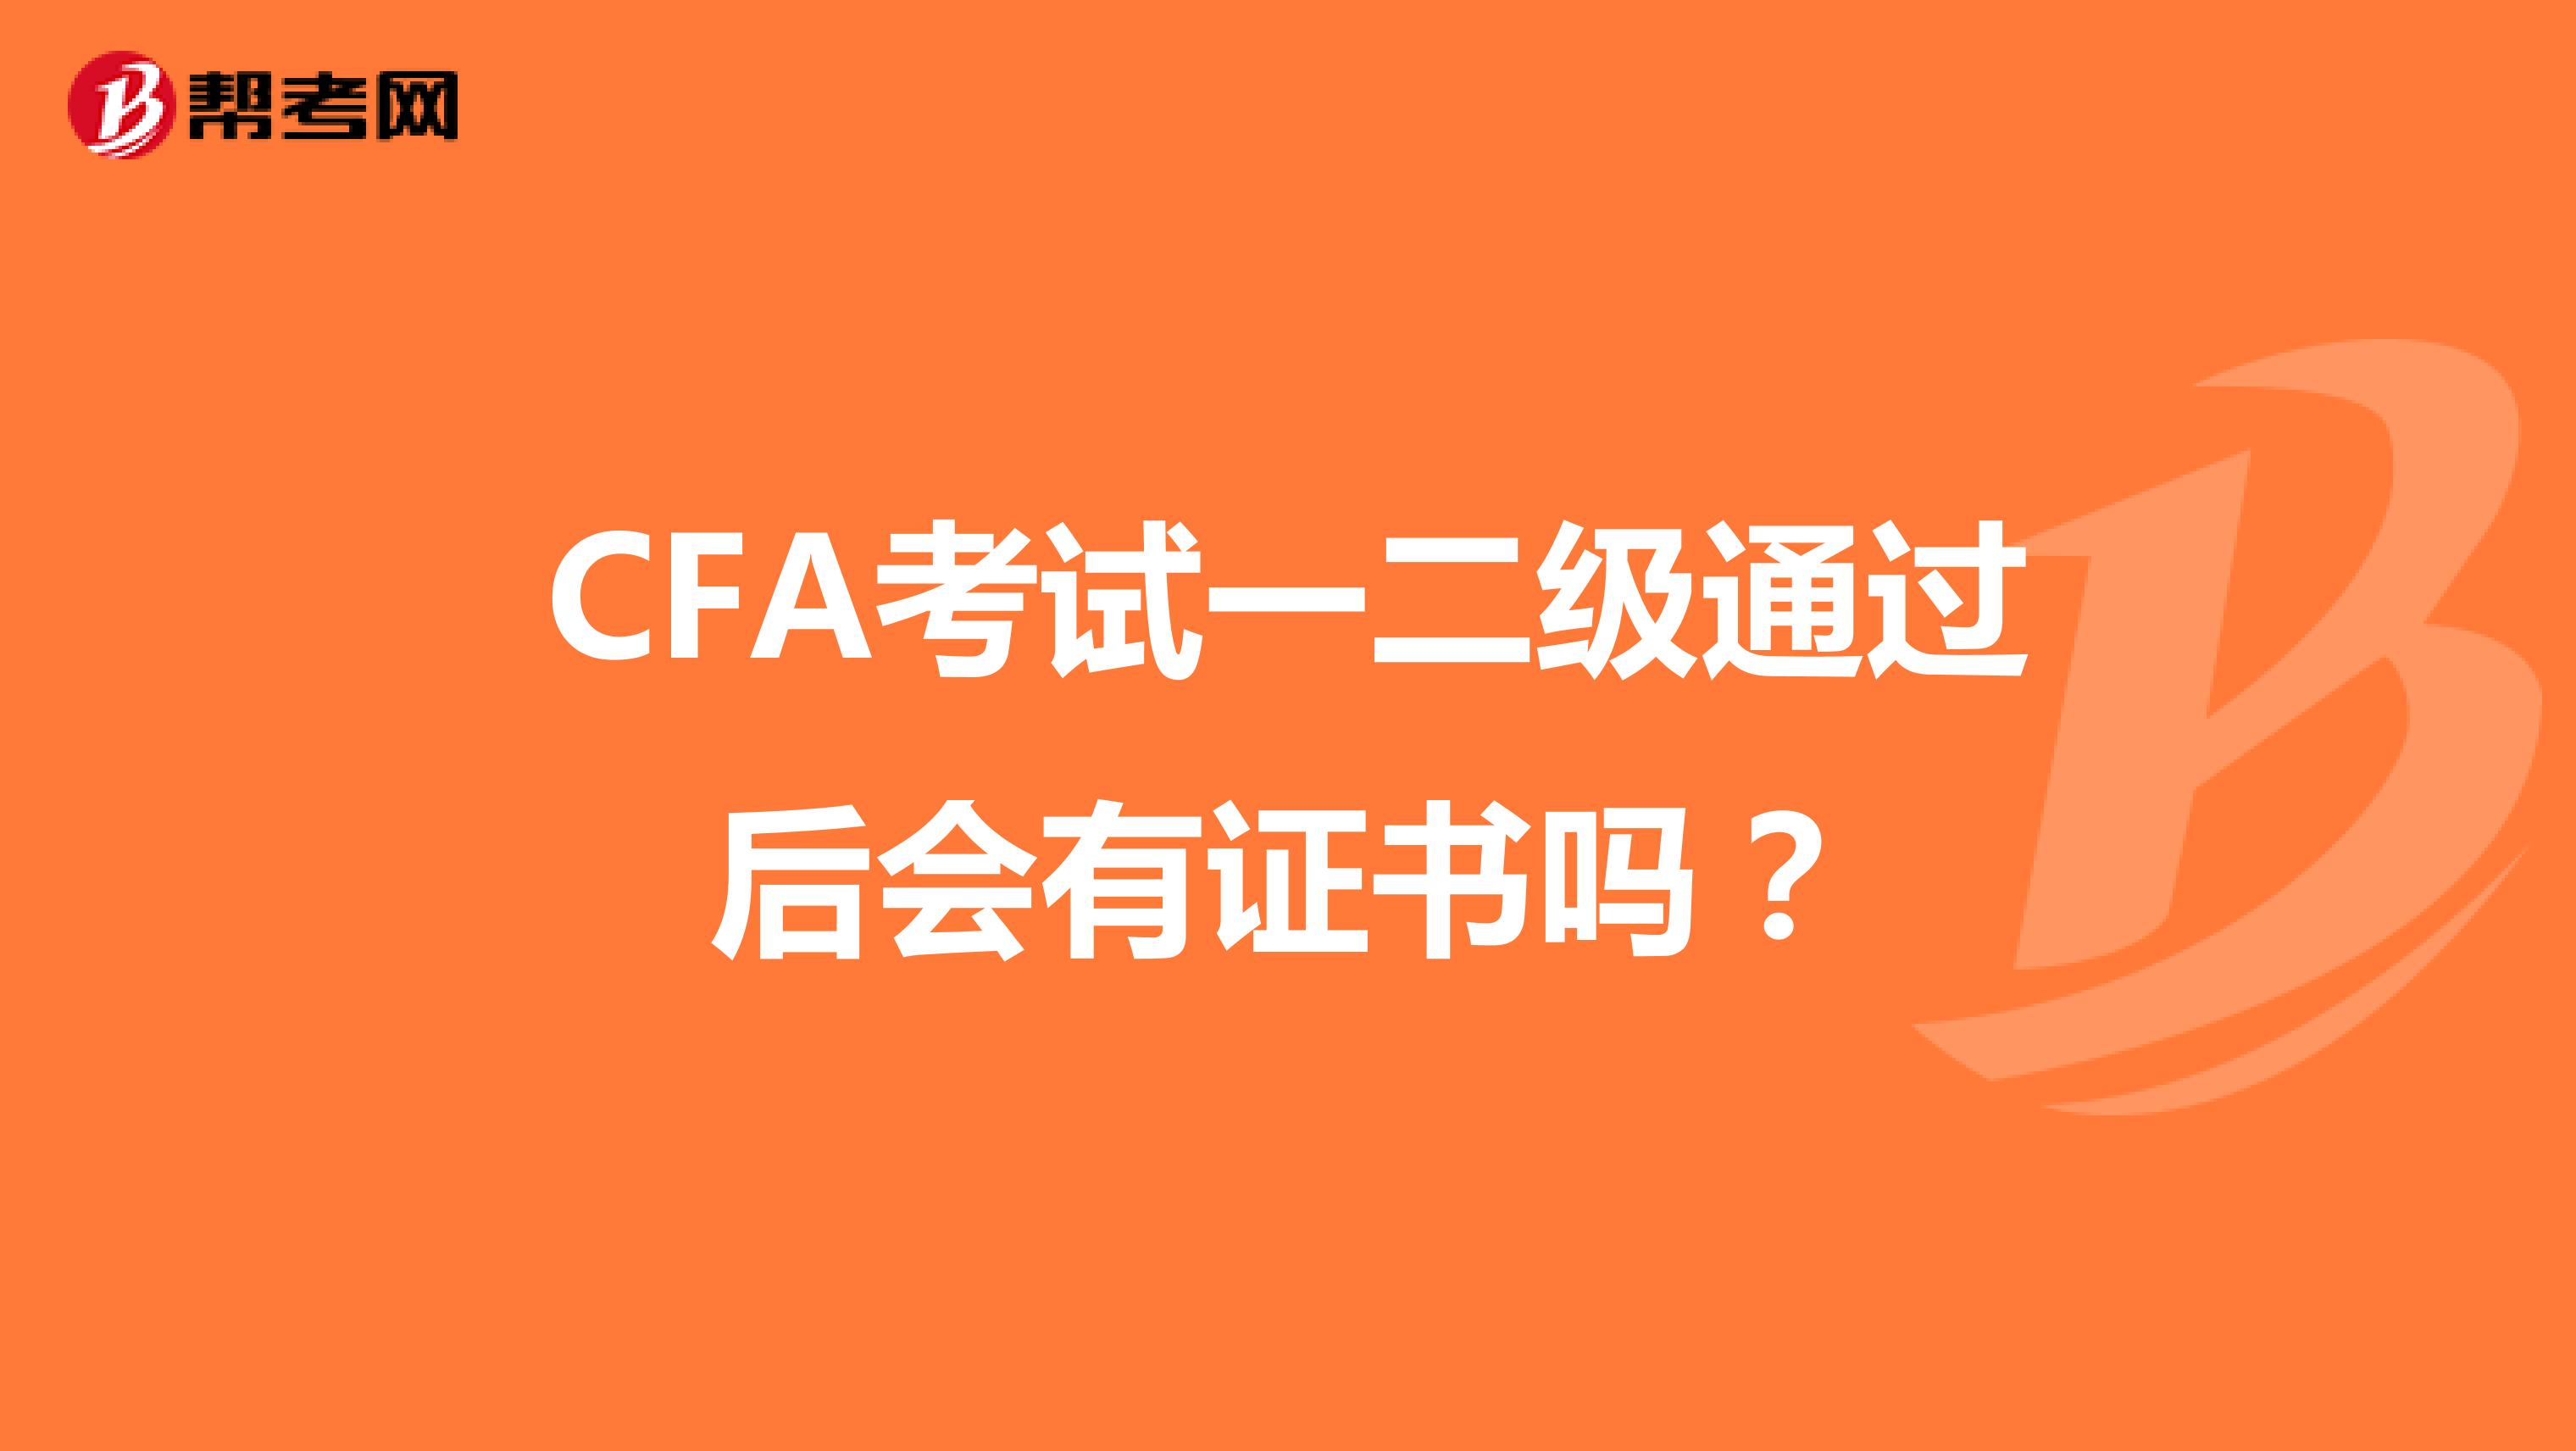 CFA考试一二级通过后会有证书吗？